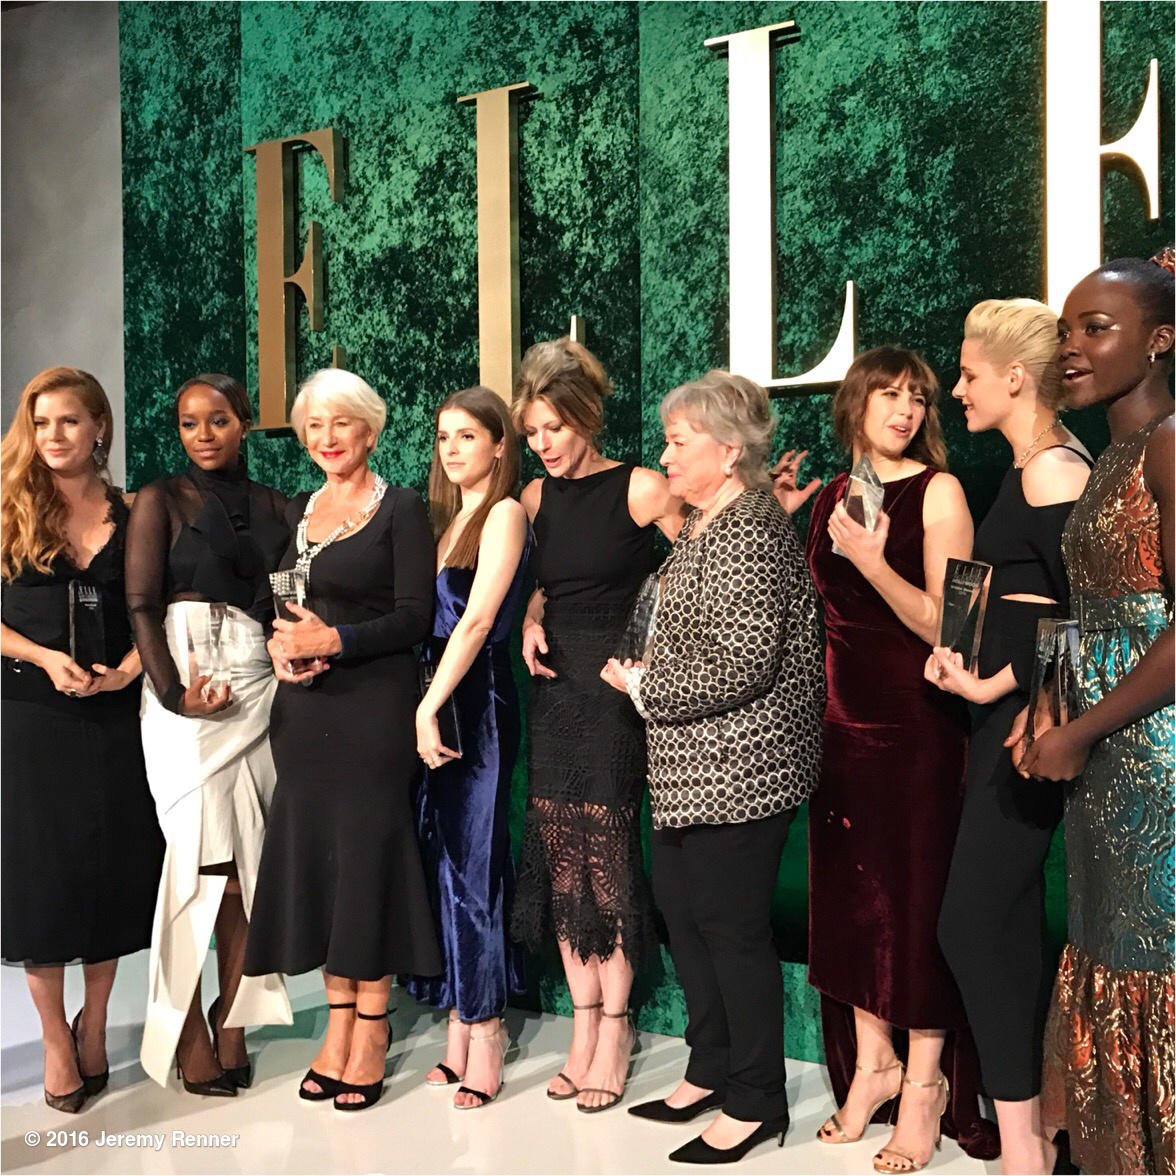 What a great moment amongst these tremendous women  thx Elle #celebratingcontributions #amazingwomen #amyadams #elle https://t.co/zcvACQZEMz